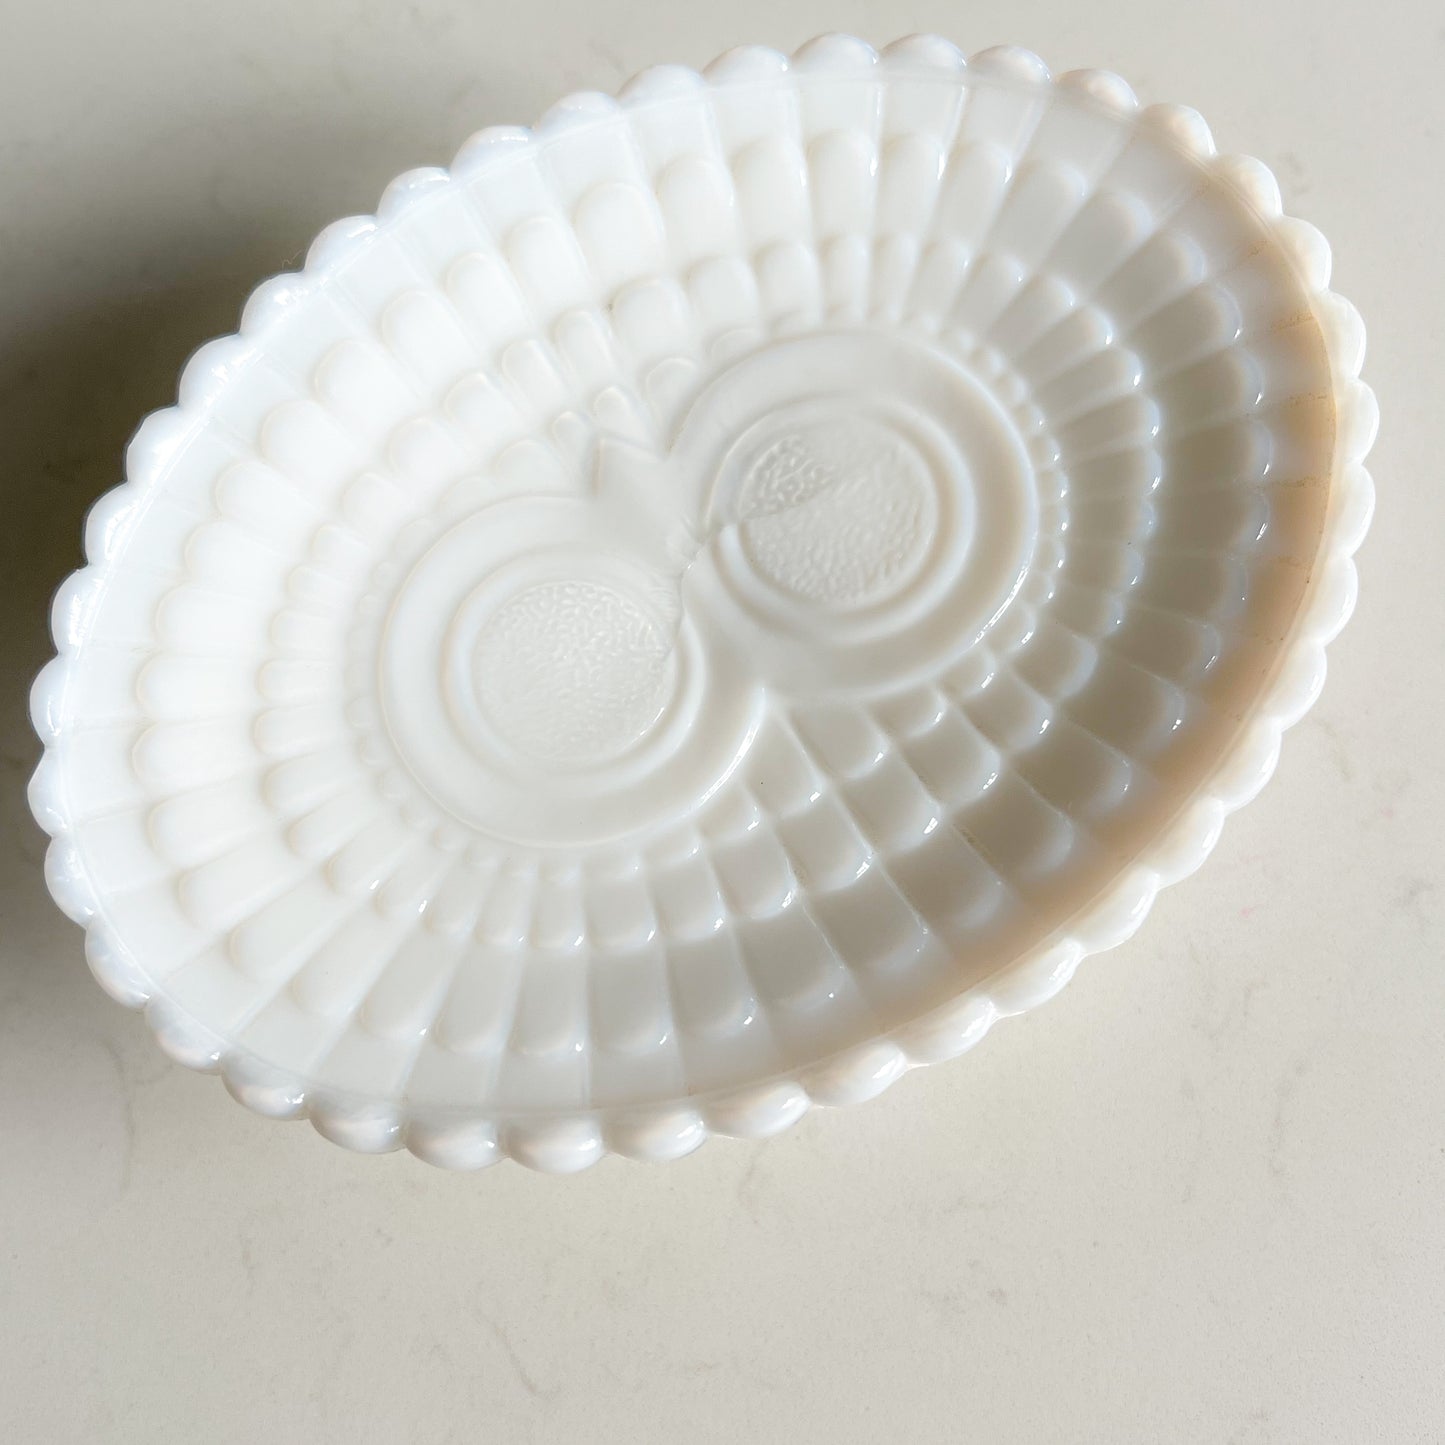 Mermaid Milk Glass Soap Jewelry Sustainable Dish - BelleStyle